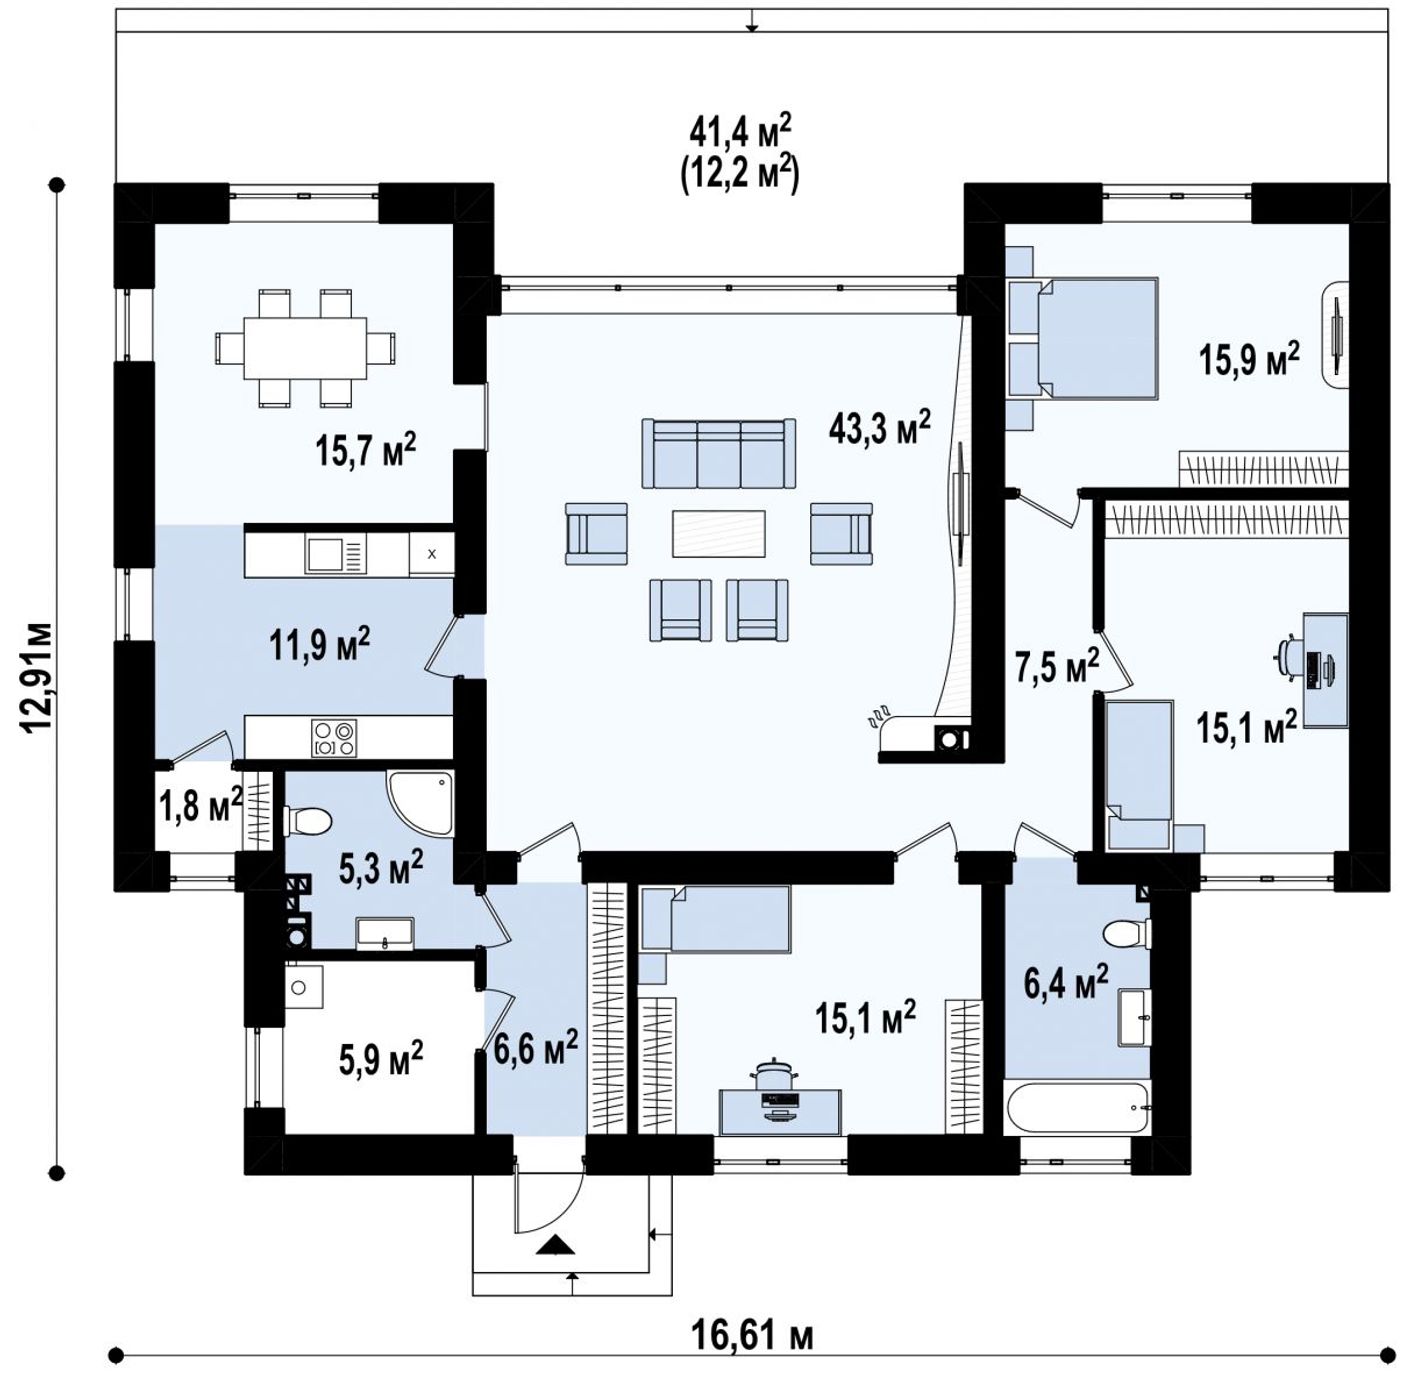 1-ый этаж - план проекта Zx111